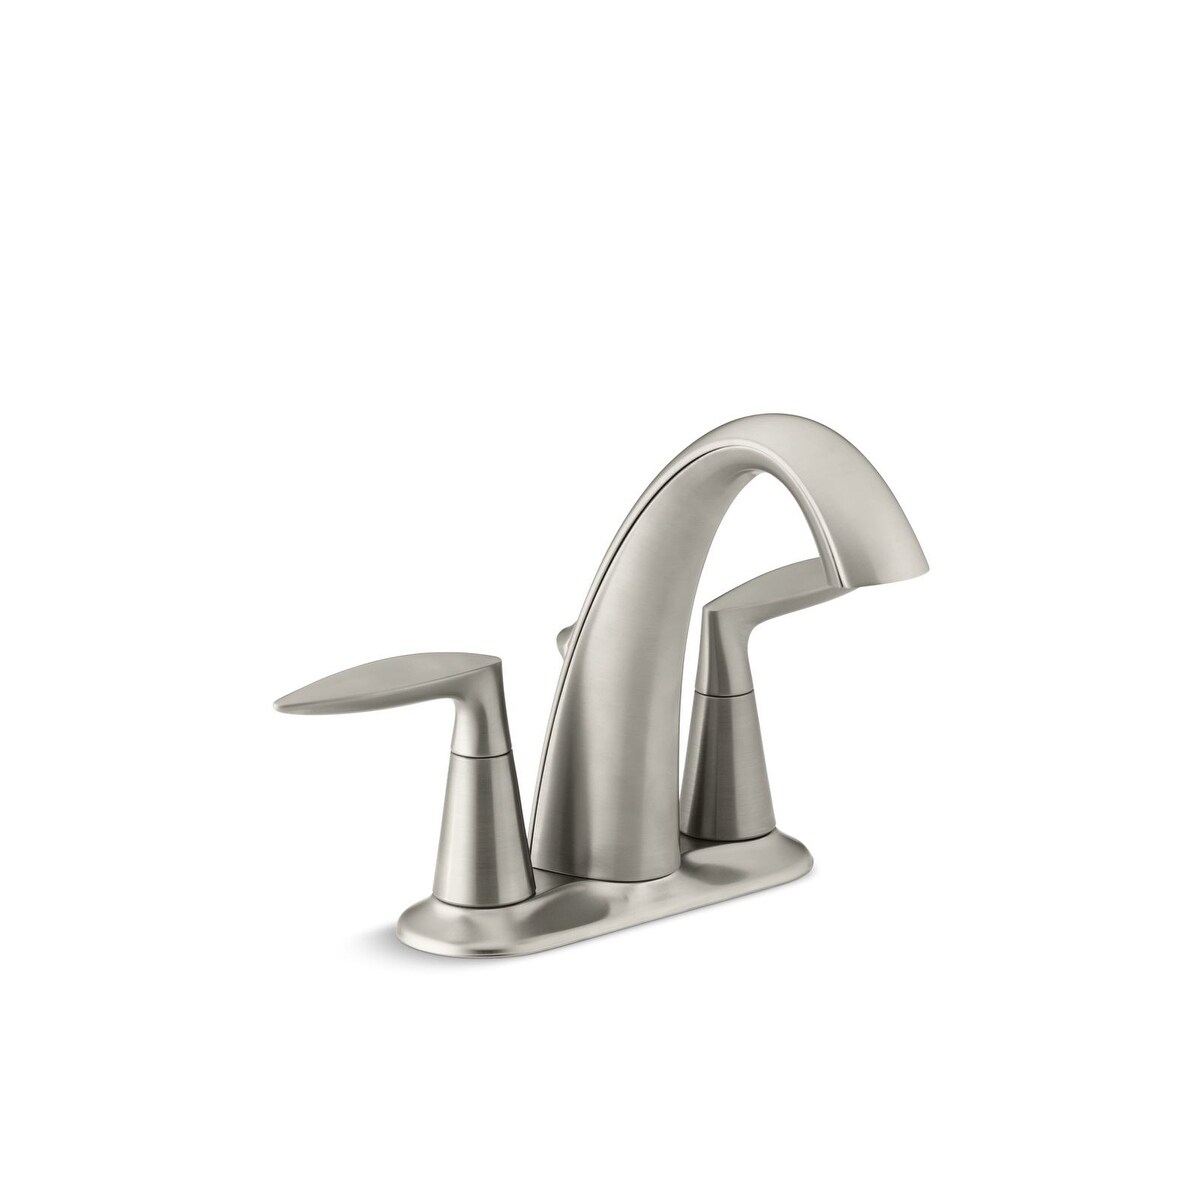 Kohler Alteo Centerset Bathroom Sink Faucet Oil-Rubbed Bronze (K-45100-4-2BZ)  Bed Bath  Beyond 21507258